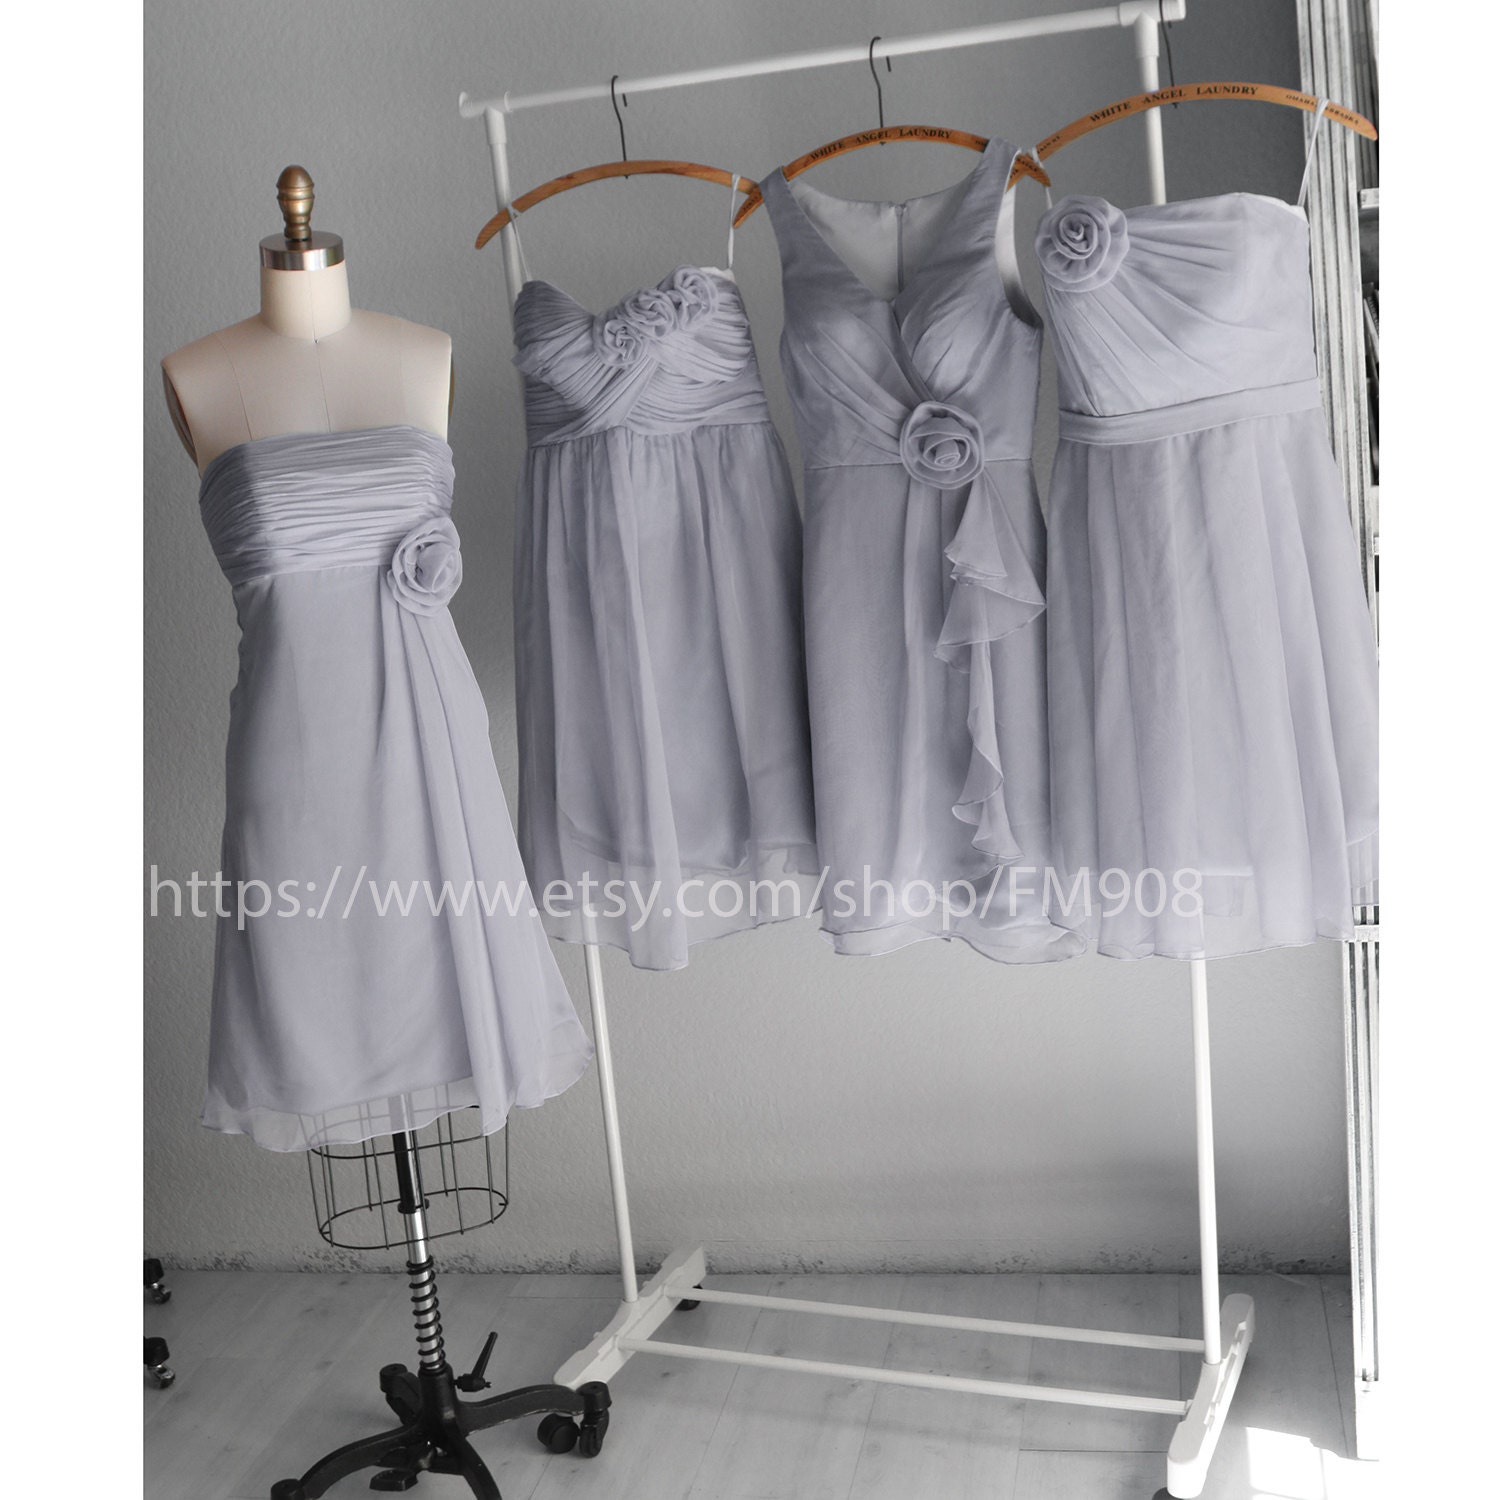 mix match style bridesmaid dresses / Romantic /pale pink / dresses /Fairy / Dreamy / Bridesmaid / Party / wedding / Bride (E002 Gray)